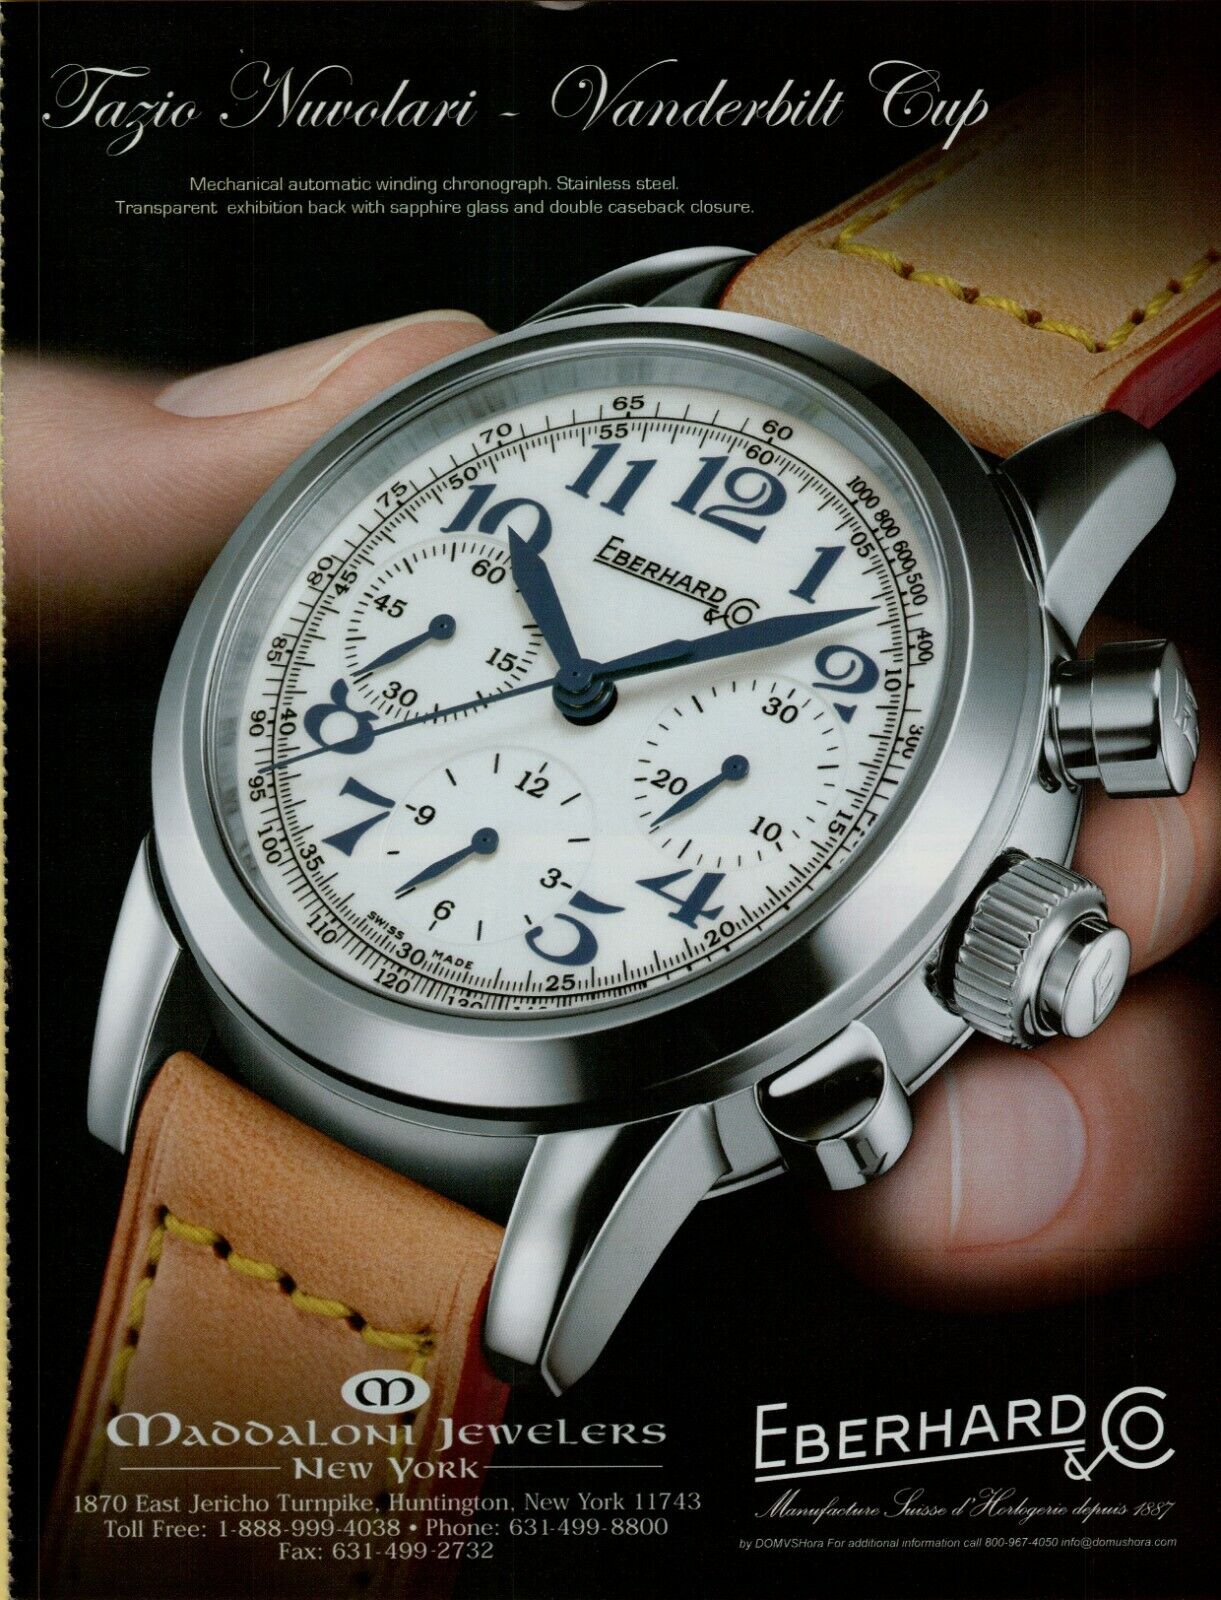 2006 Eberhard Tazio Nuvolari Vanderbilt Cup Steel Watch Photo Vintage Print Ad